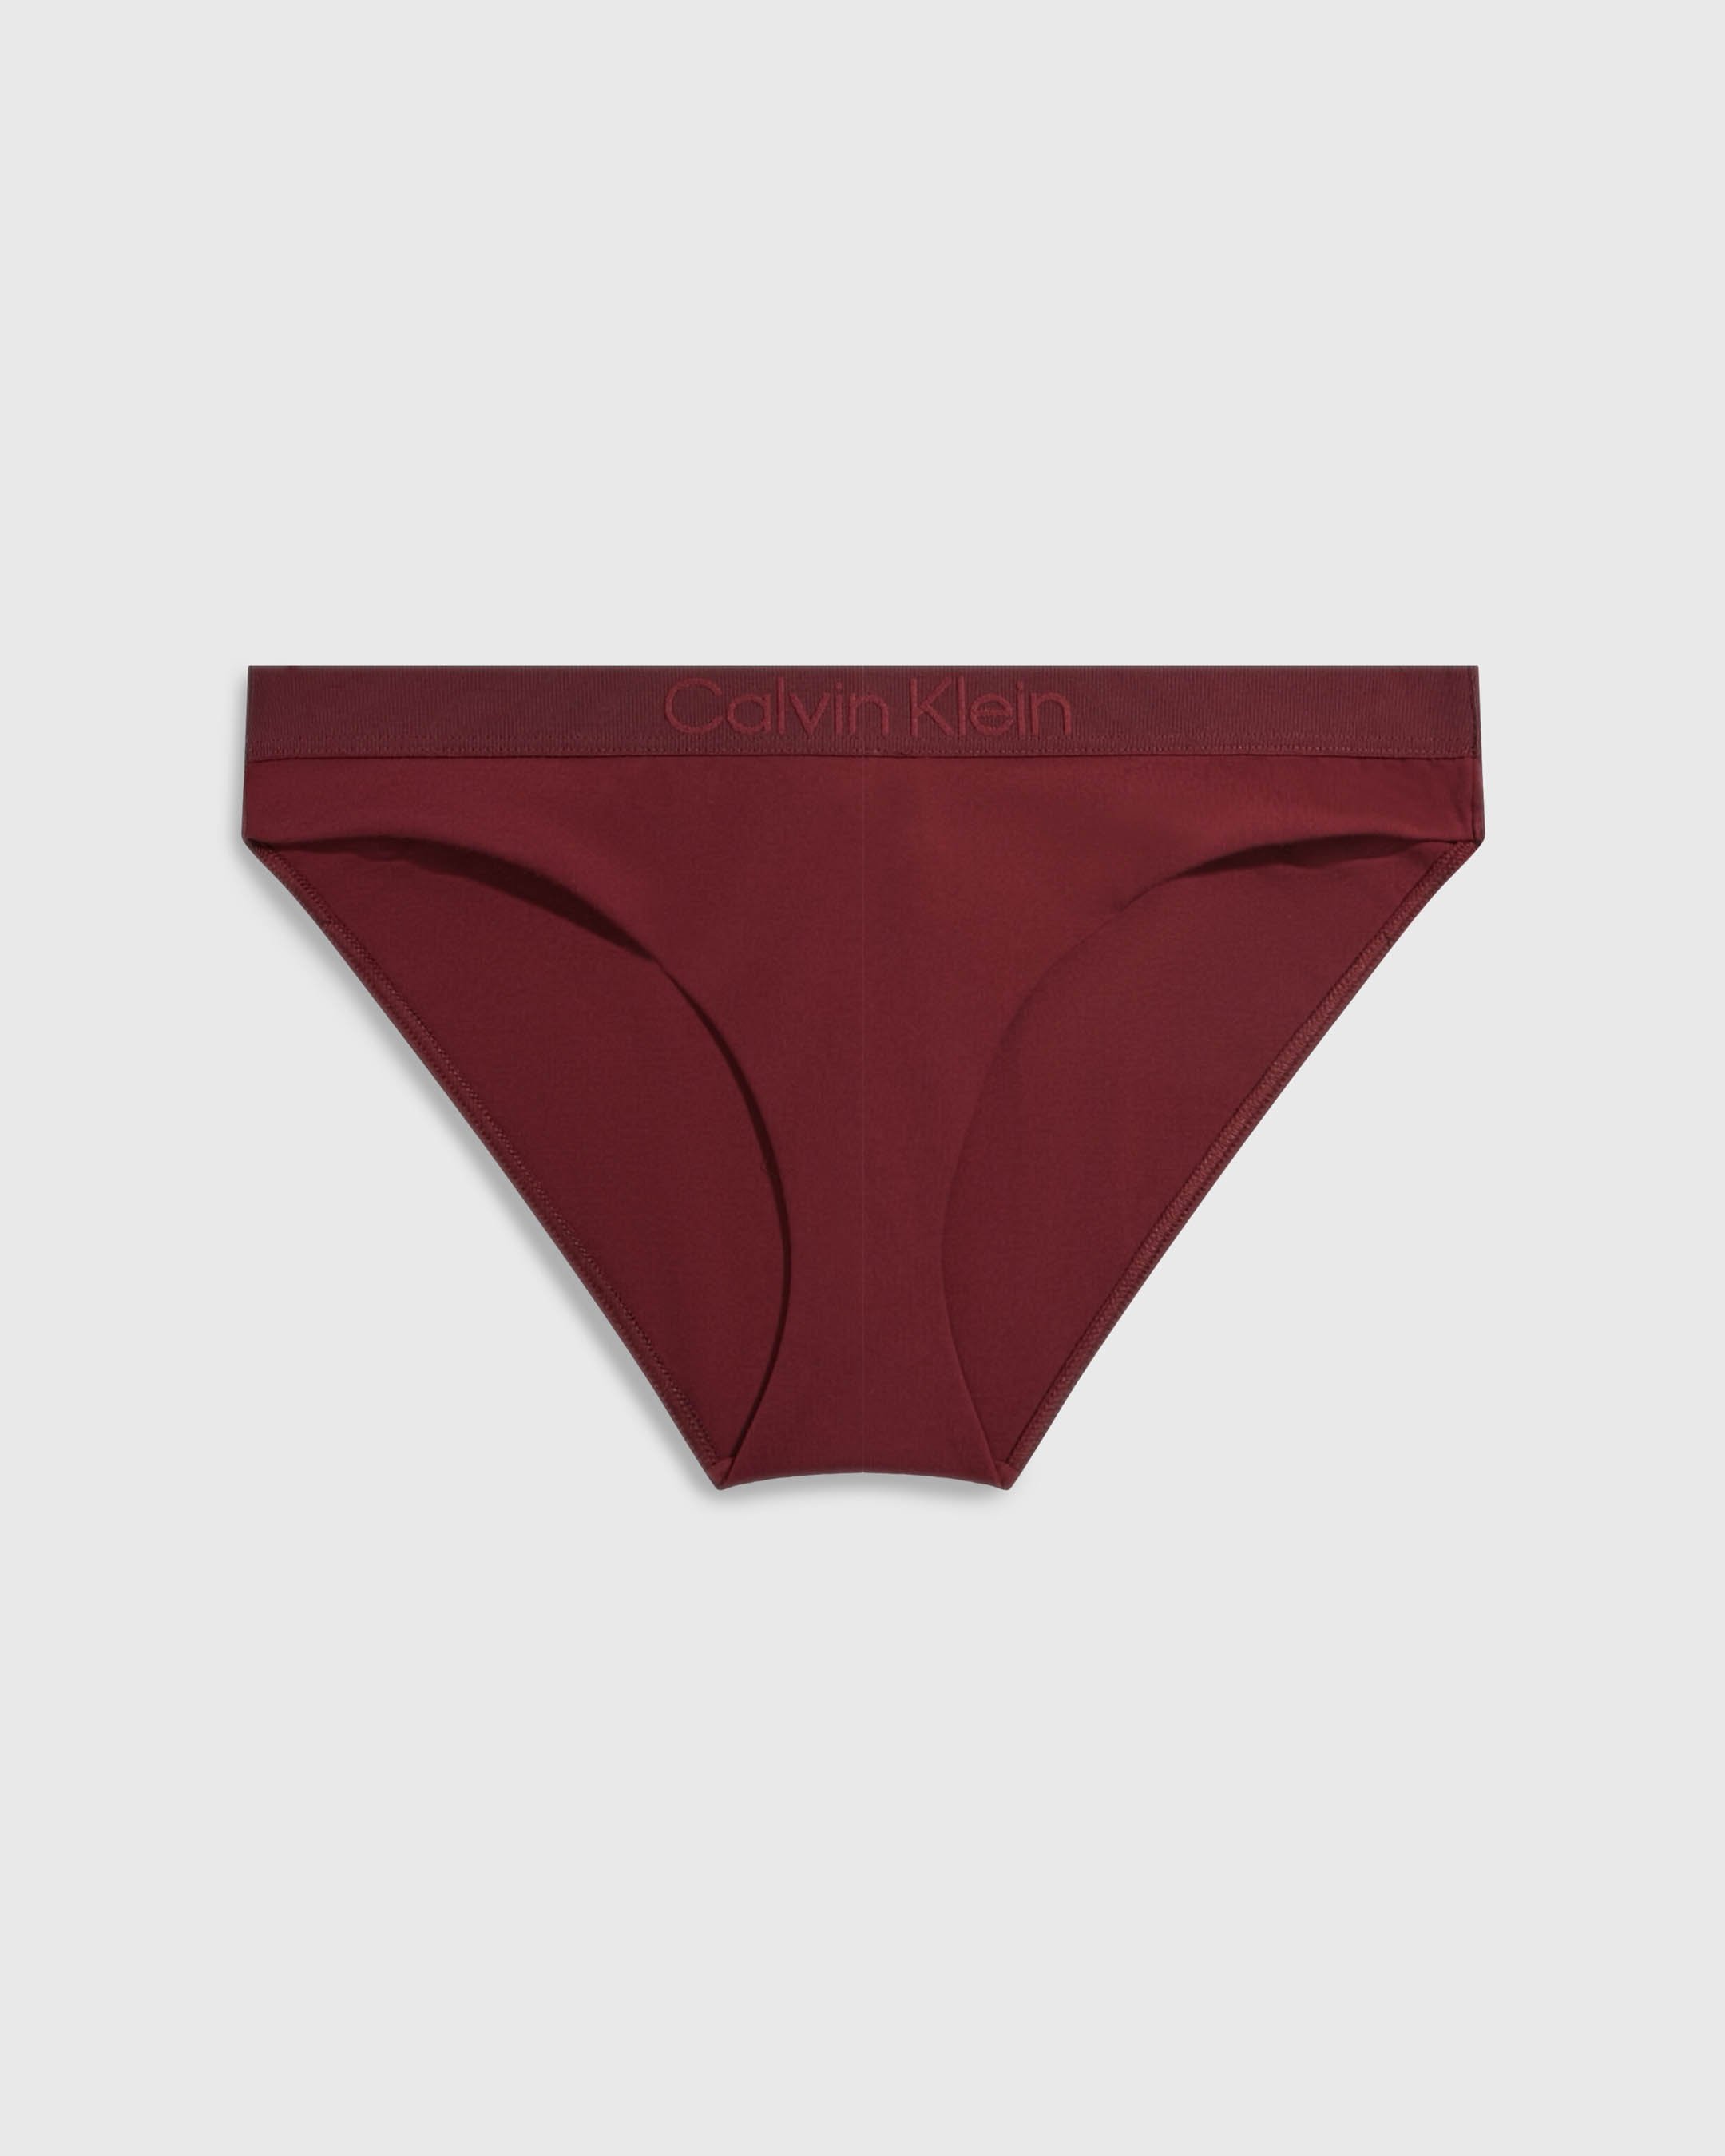 Calvin Klein Underwear_Bikini Cranberry_ P3,550_P 3,017.50.jpg